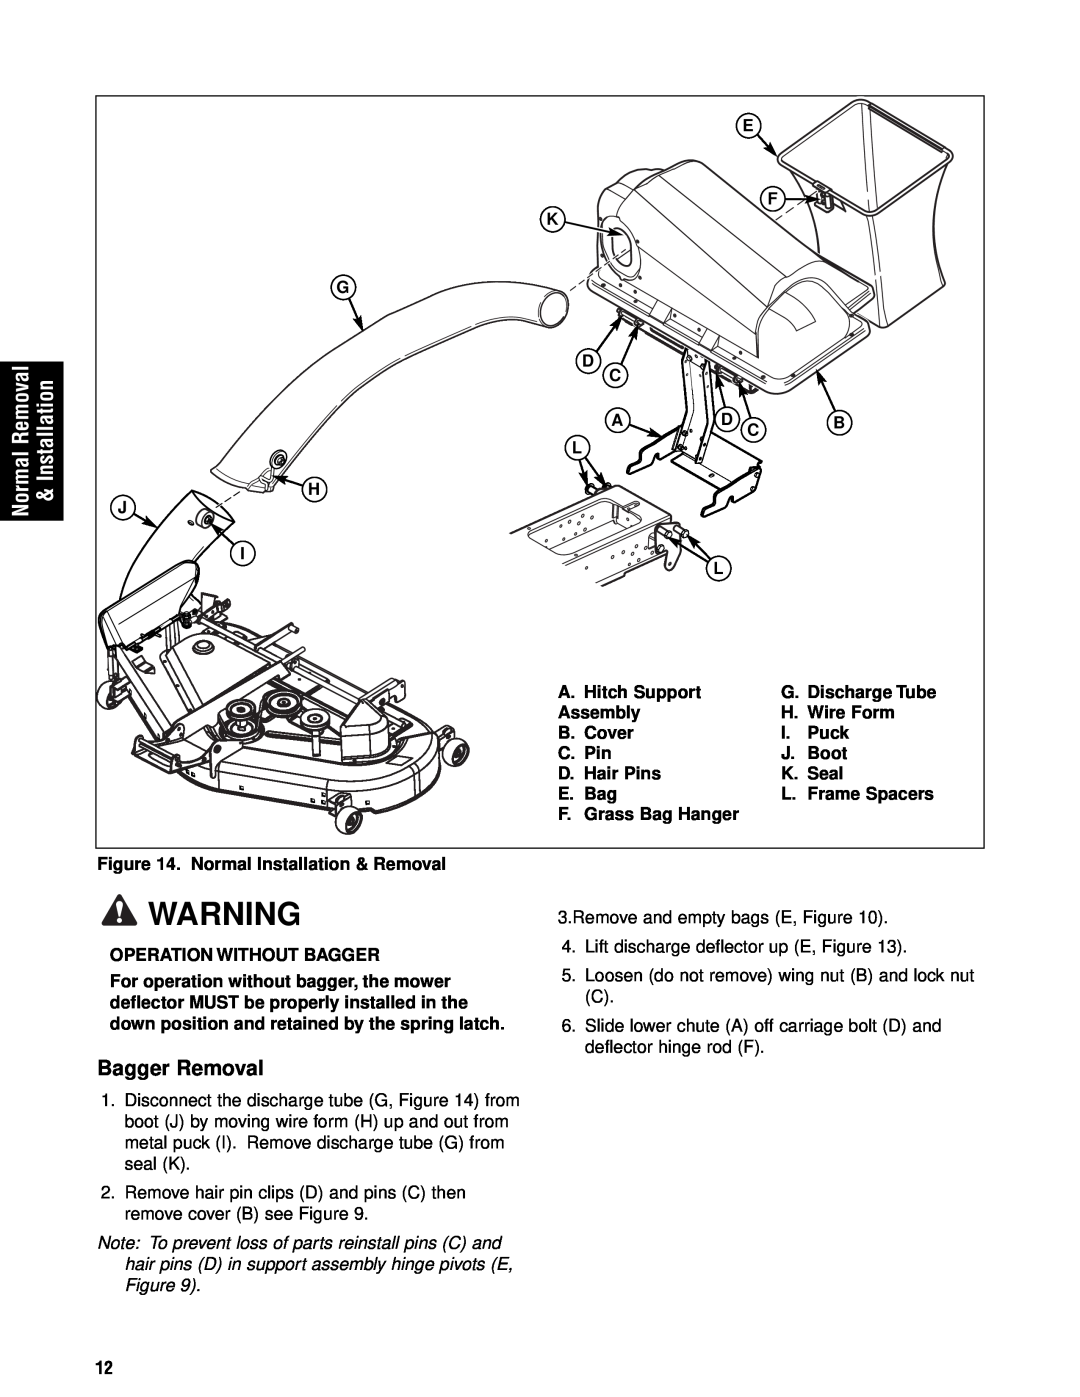 Briggs & Stratton 1695353 manual Normal Removal, Bagger Removal, Installation 